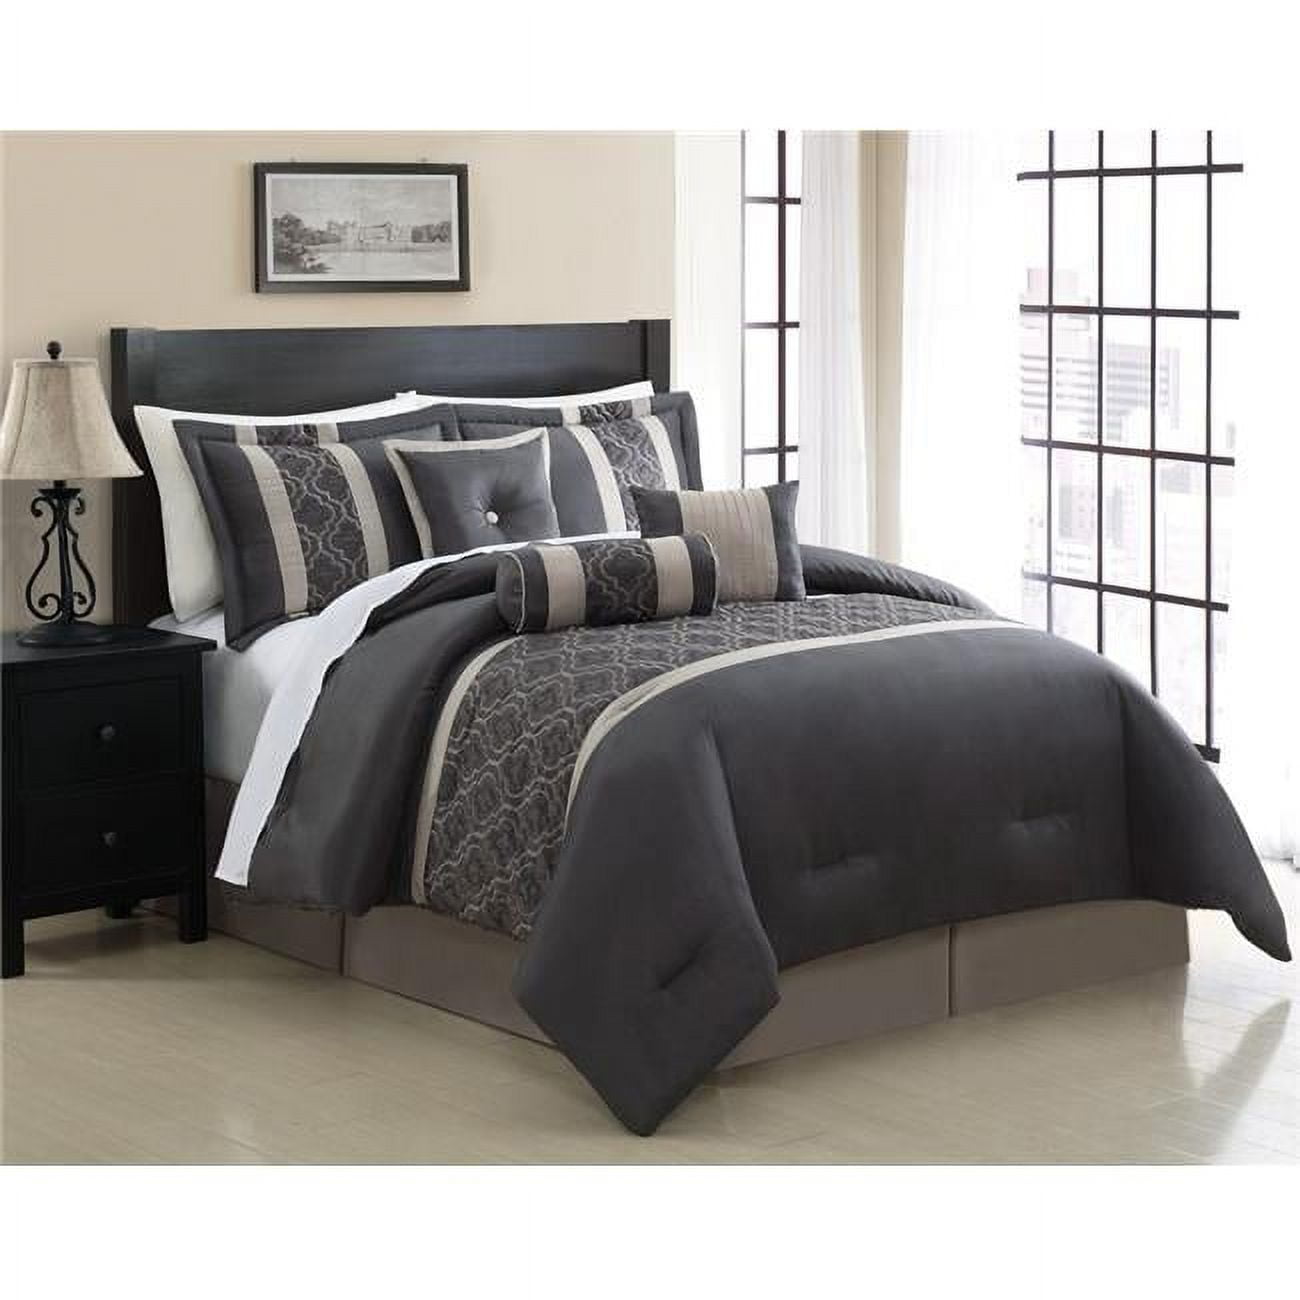 Cs0937-us 24 Piece Shilo Embroidered Design Comforter Bedding Set, Grey